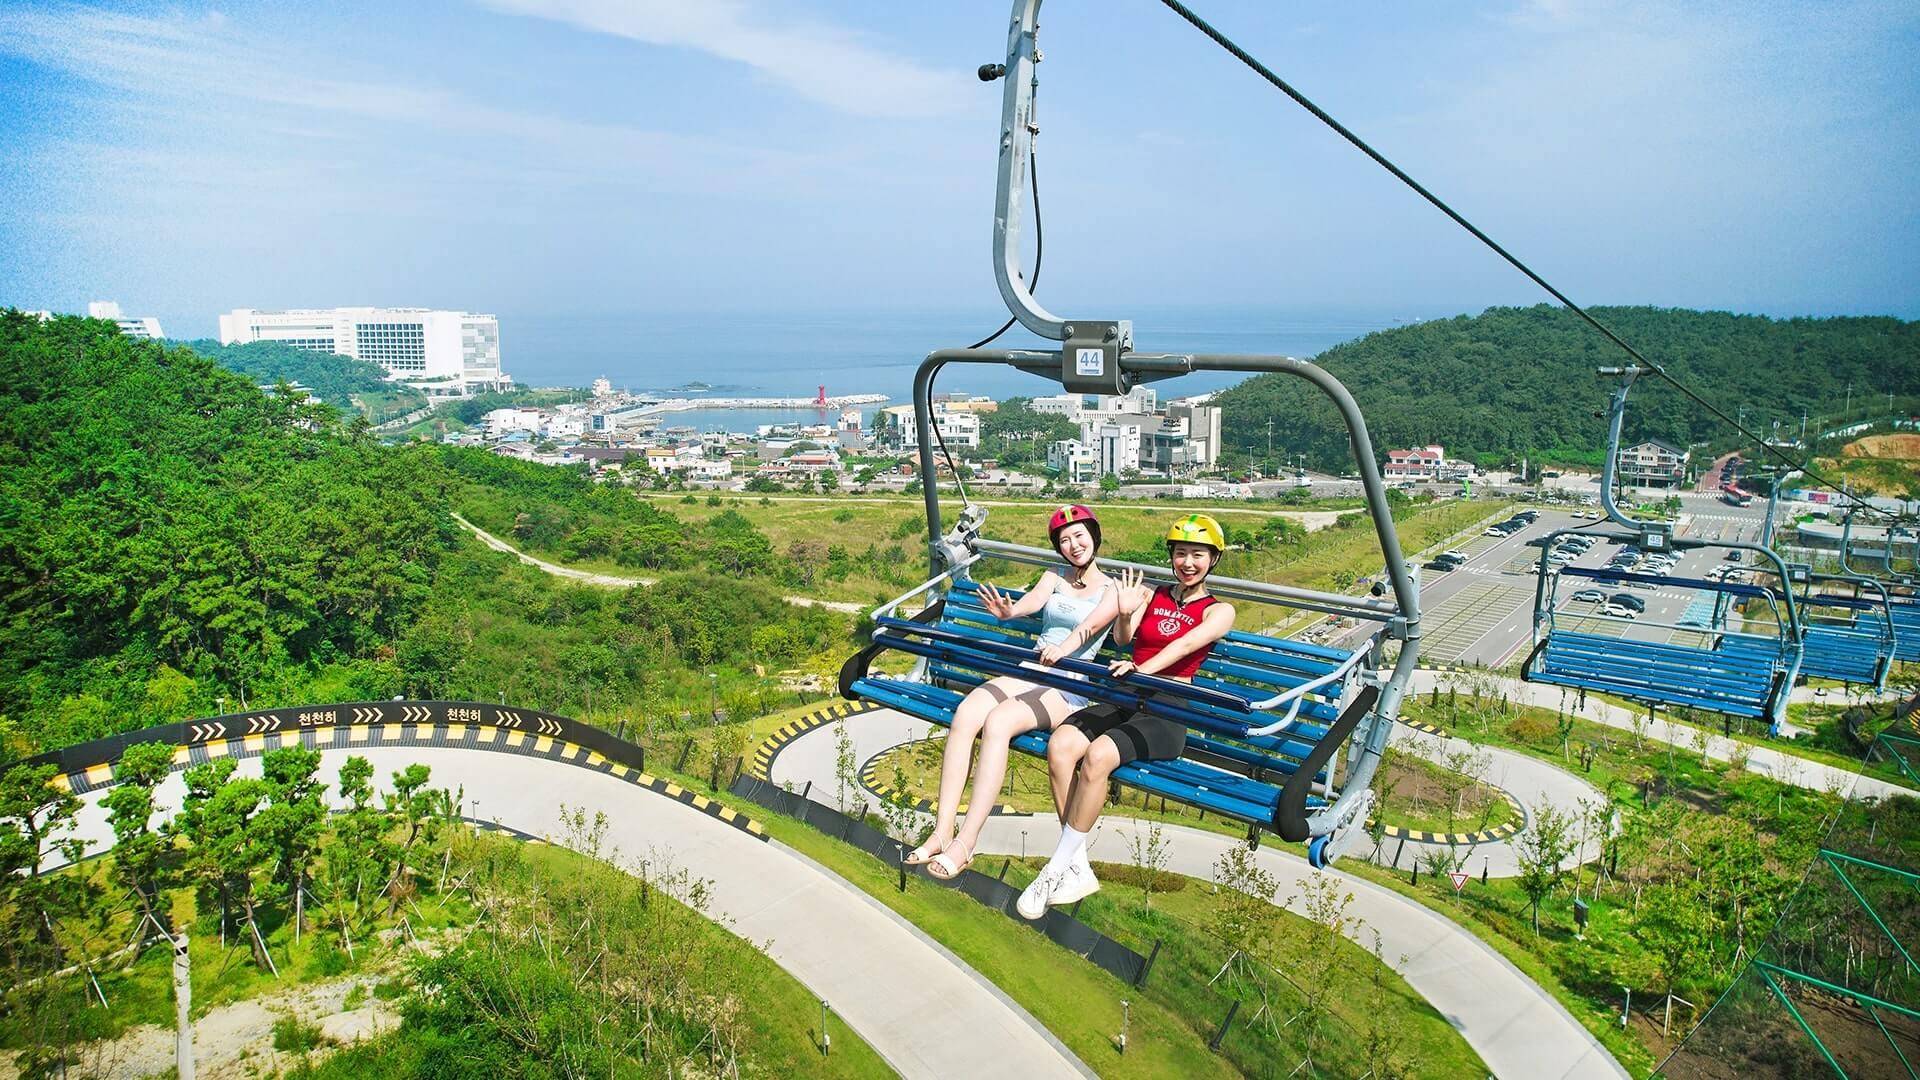 Two girls enjoy the Skyride at Skyline Luge Busan.